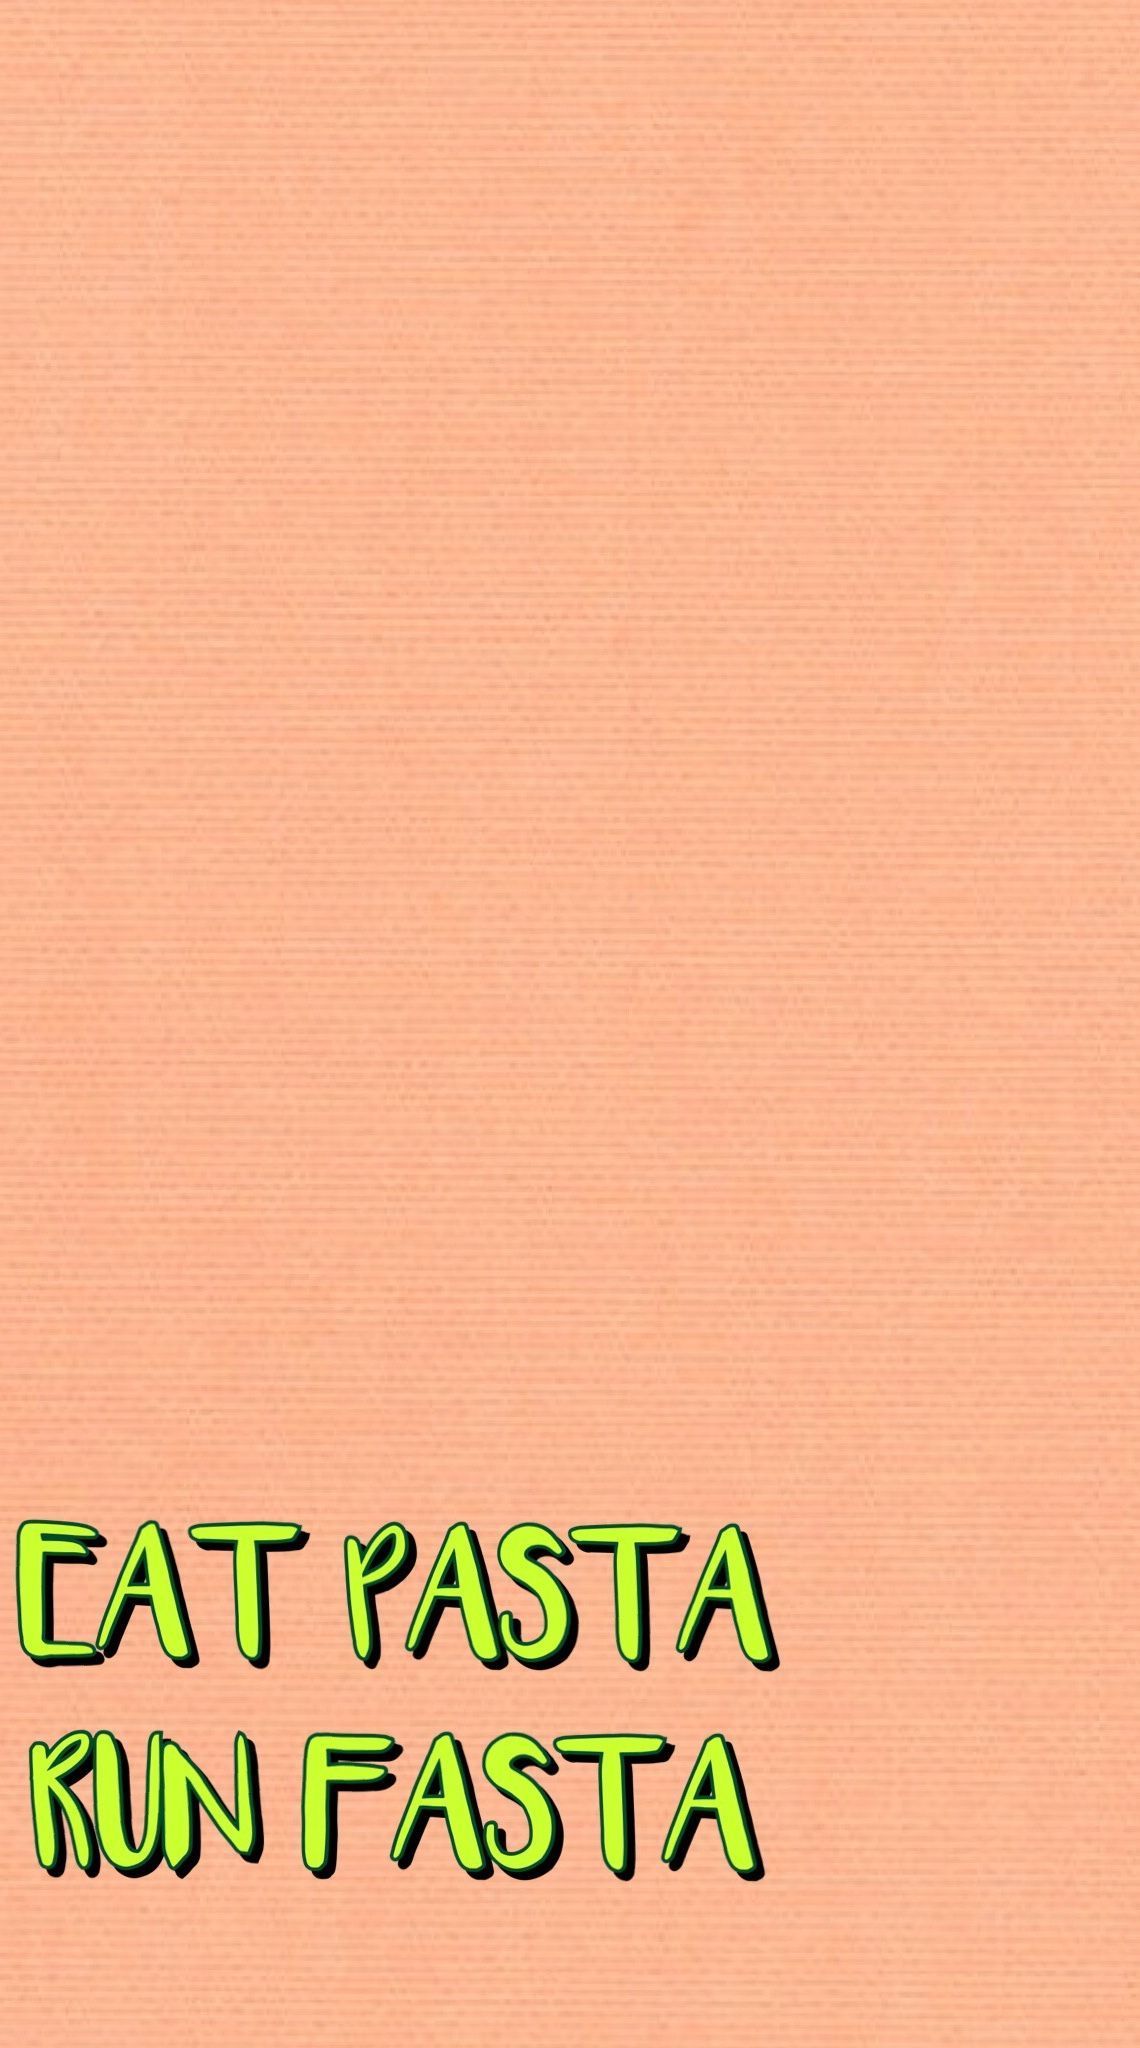 Cat Pasta Run Fasta written in green on a pink background - Pasta